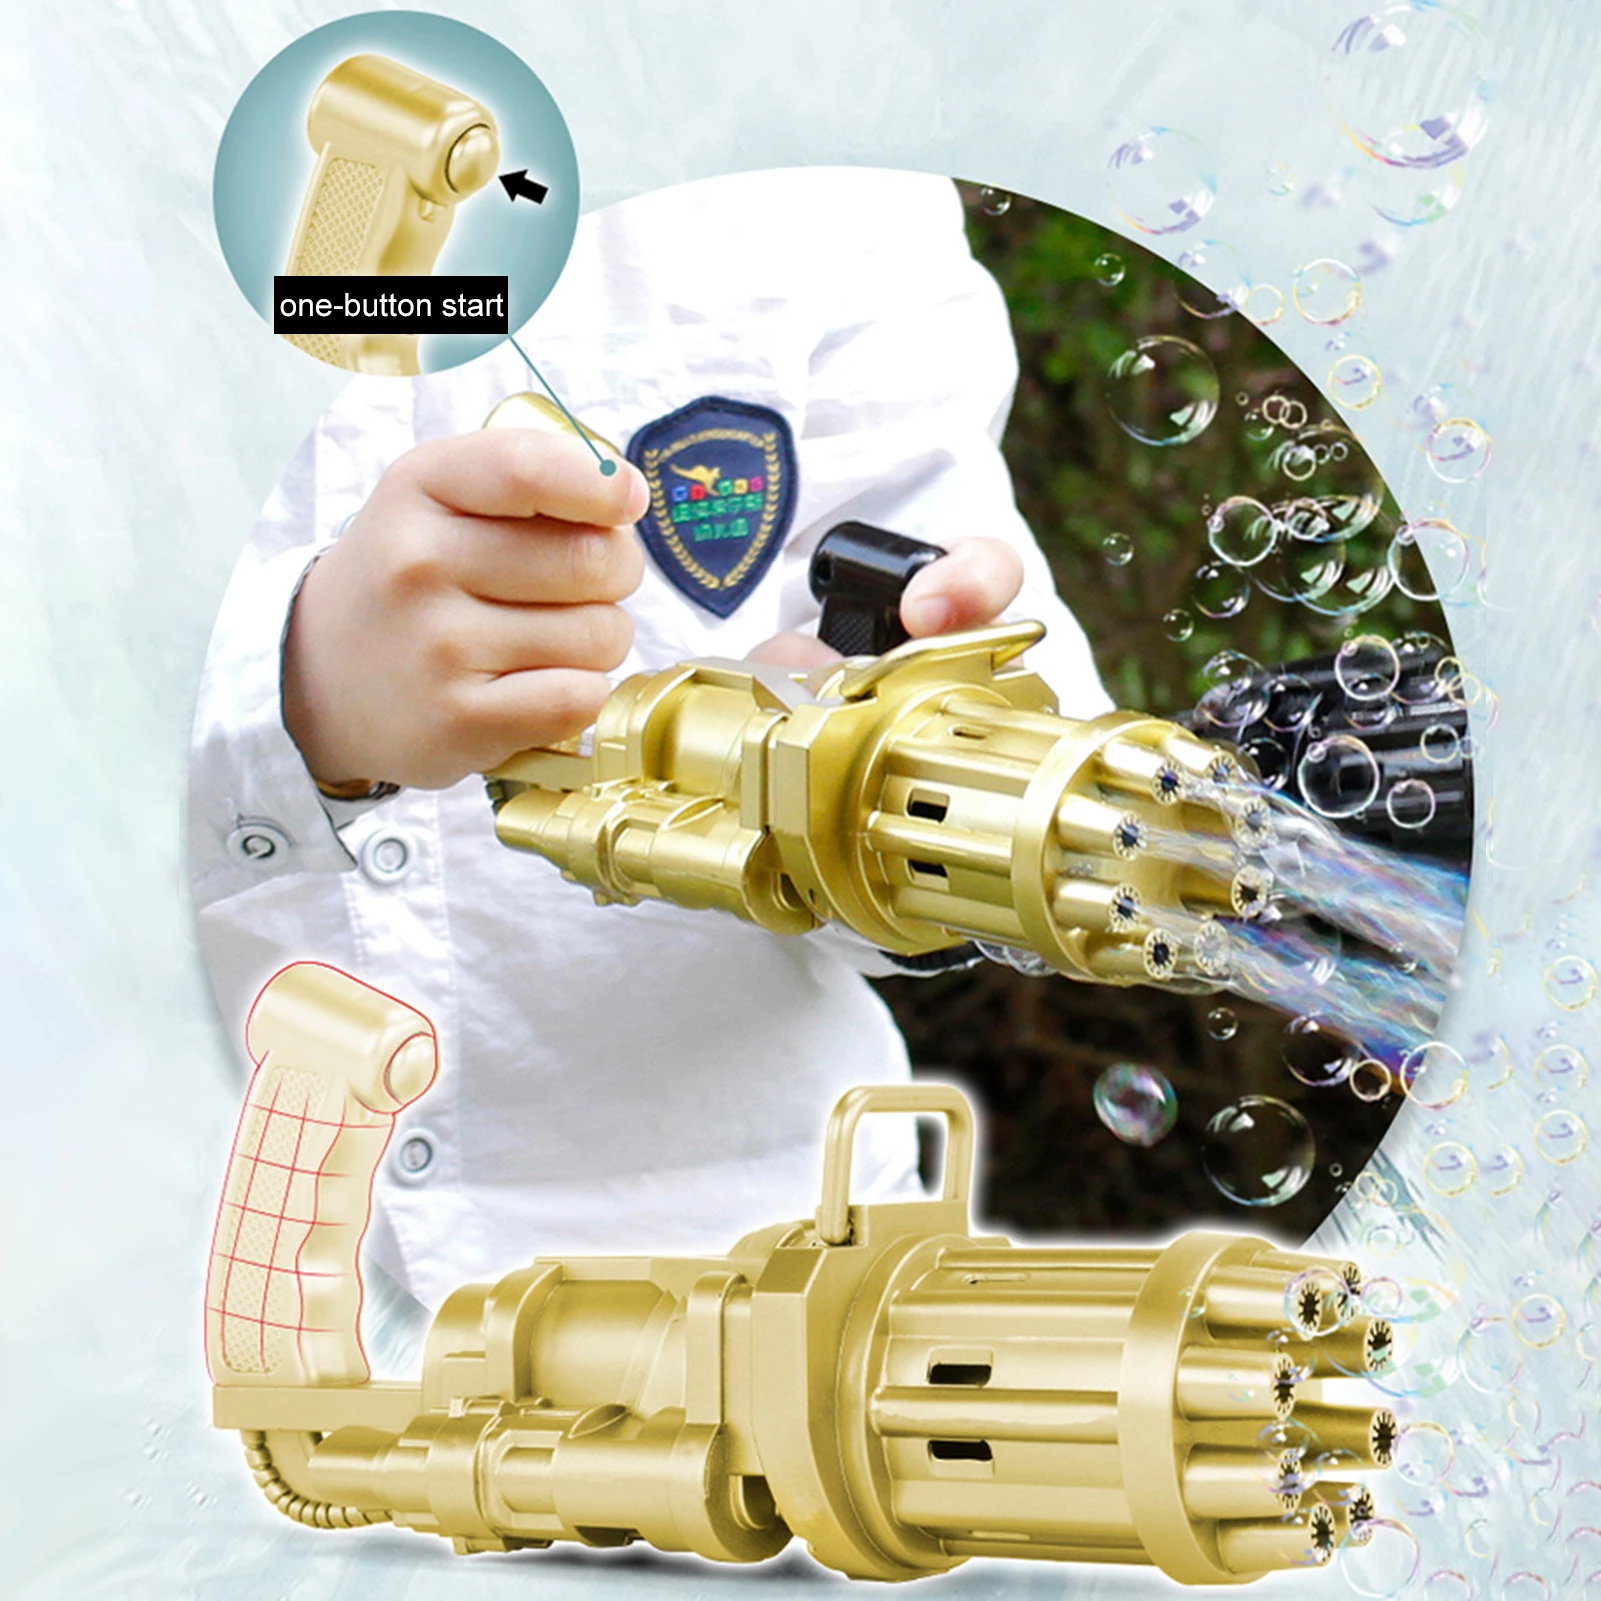 Summer Soap Water Bubble Machine Gatling Bubble Gun Toys